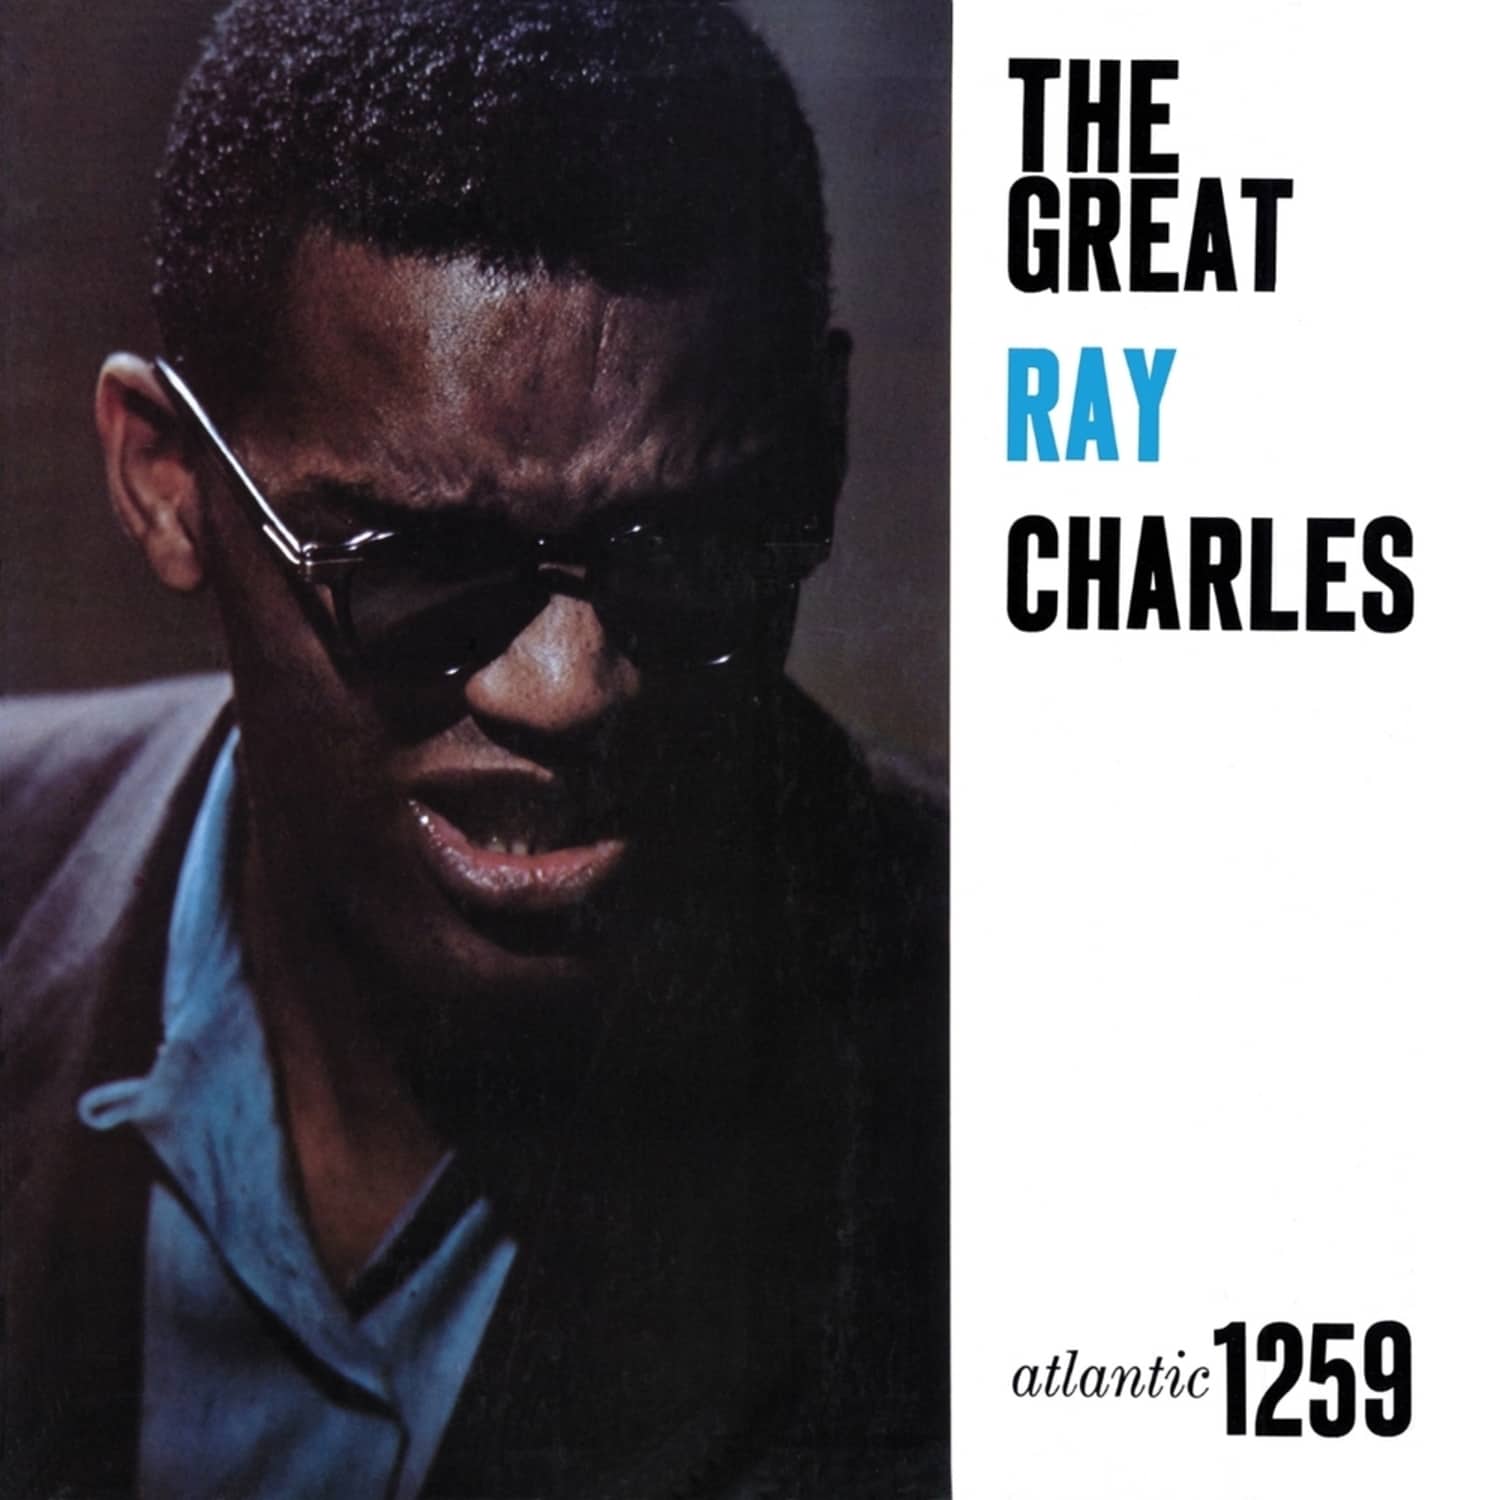 Ray Charles - THE GREAT RAY CHARLES 